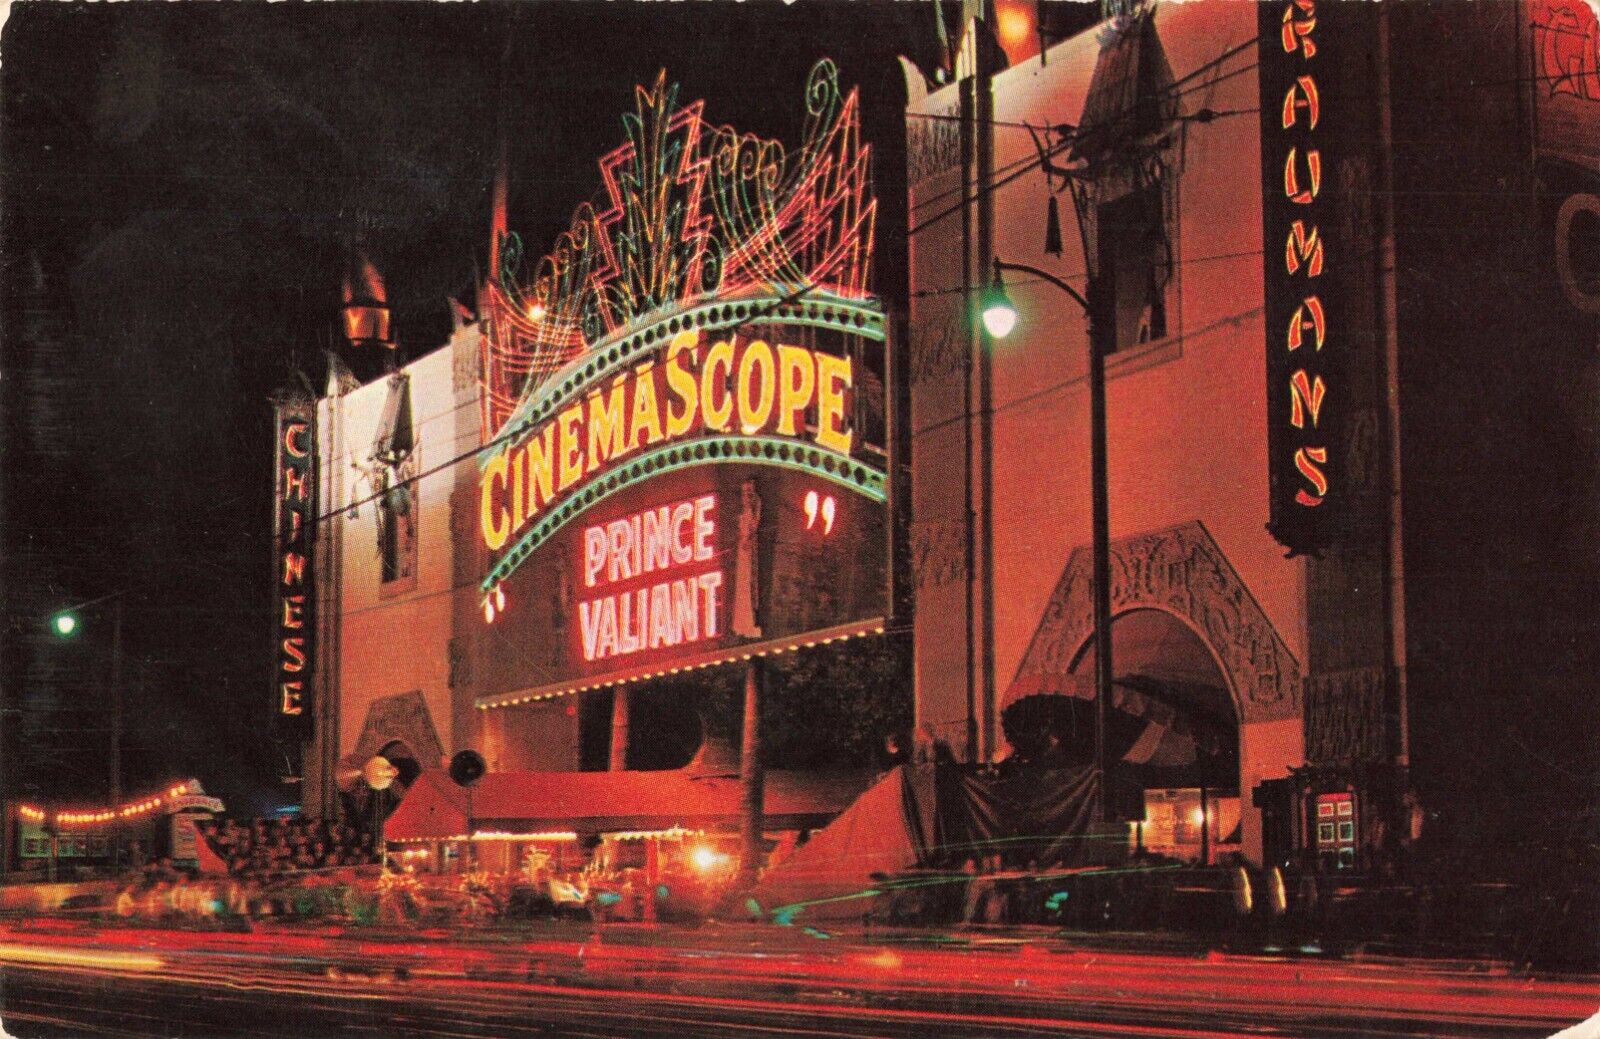 Hollywood CA, Grauman's Chinese Theatre CinemaScope Prince Valiant Vtg Postcard